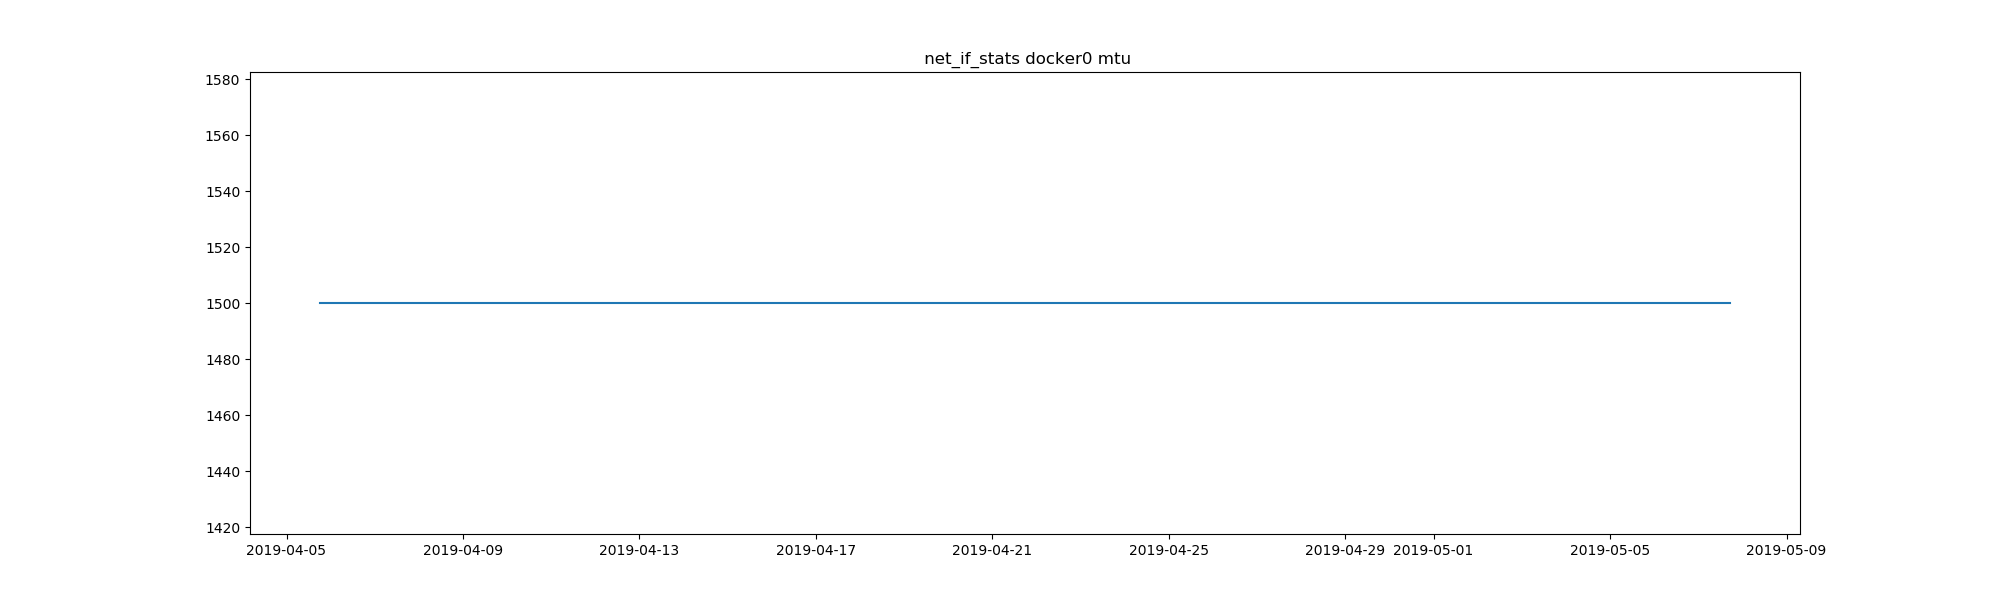 task-network-net_if_stats-veth9de5b04-tipbr0-enp0s31f6-docker0-isup-duplex-speed-mtu.png